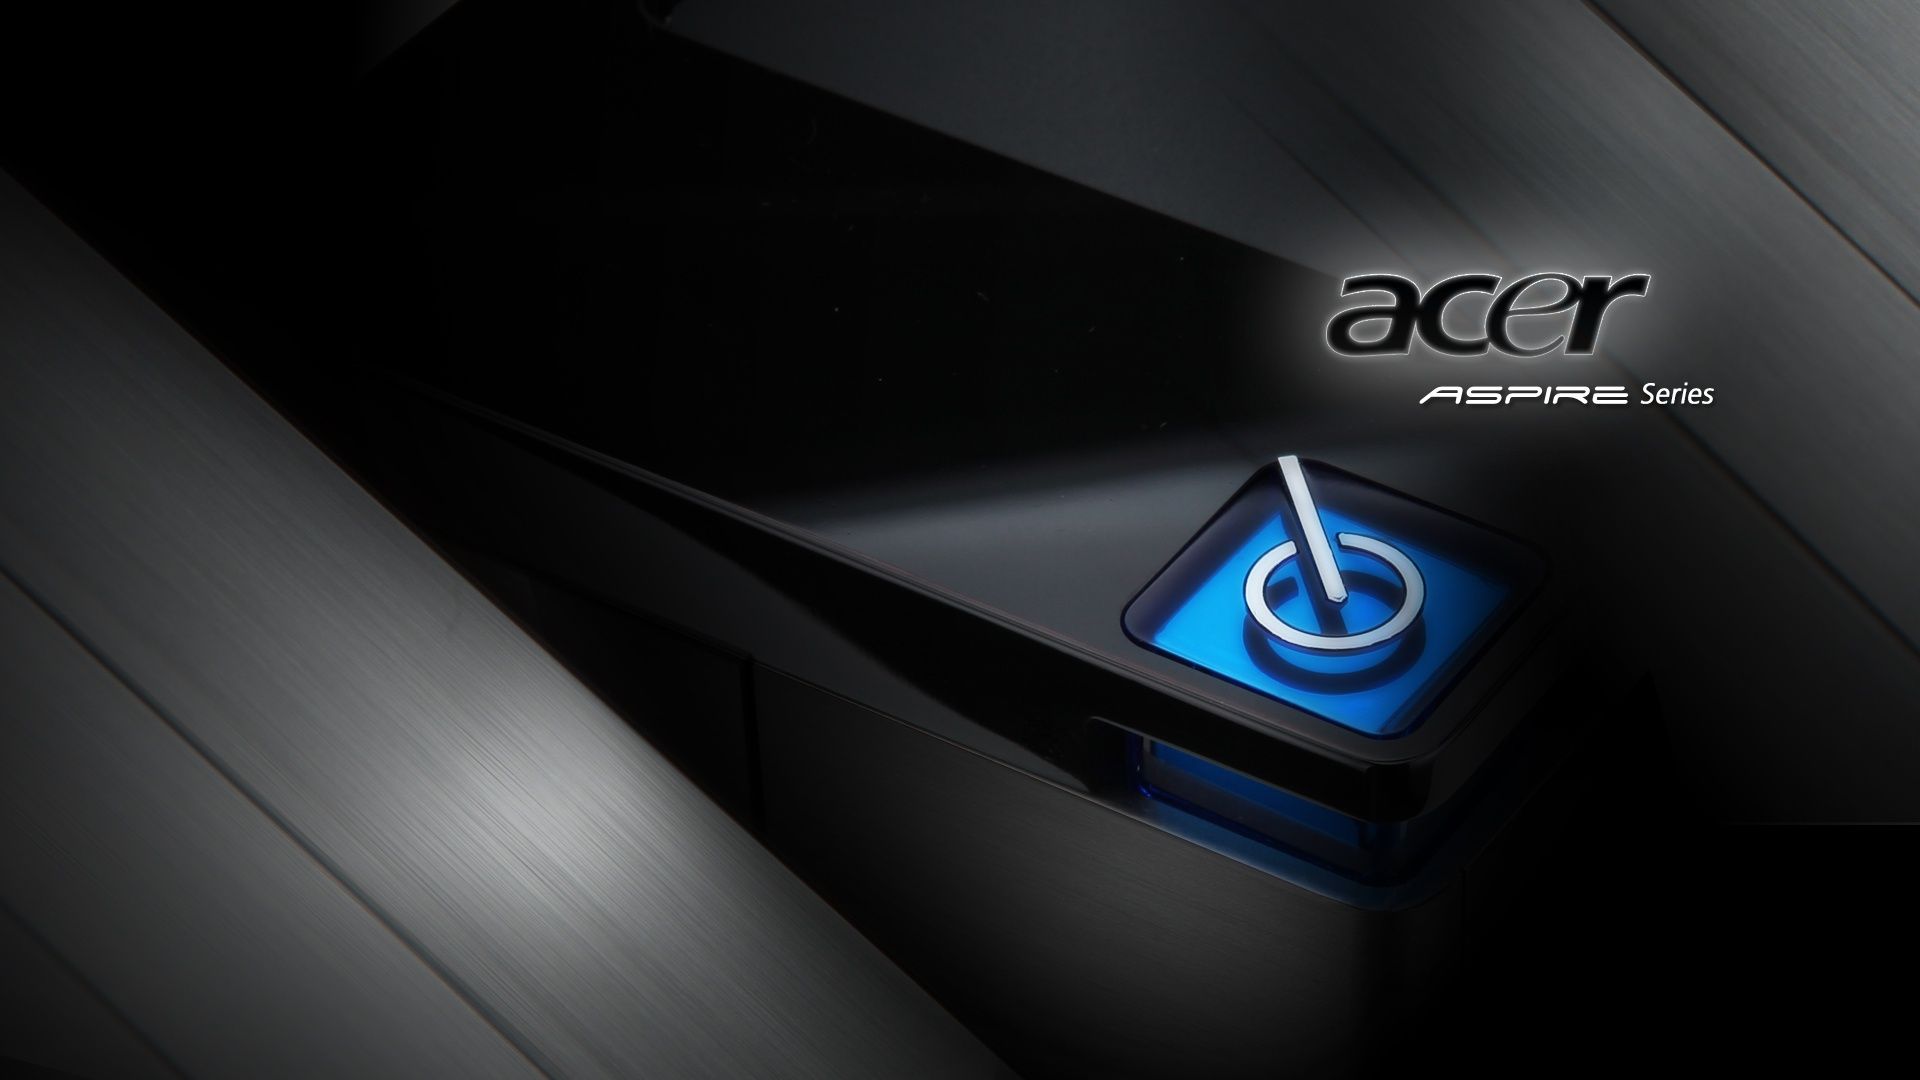 Acer Aspire Series Logo HD Wallpaper Desktop #7614 Wallpaper ...